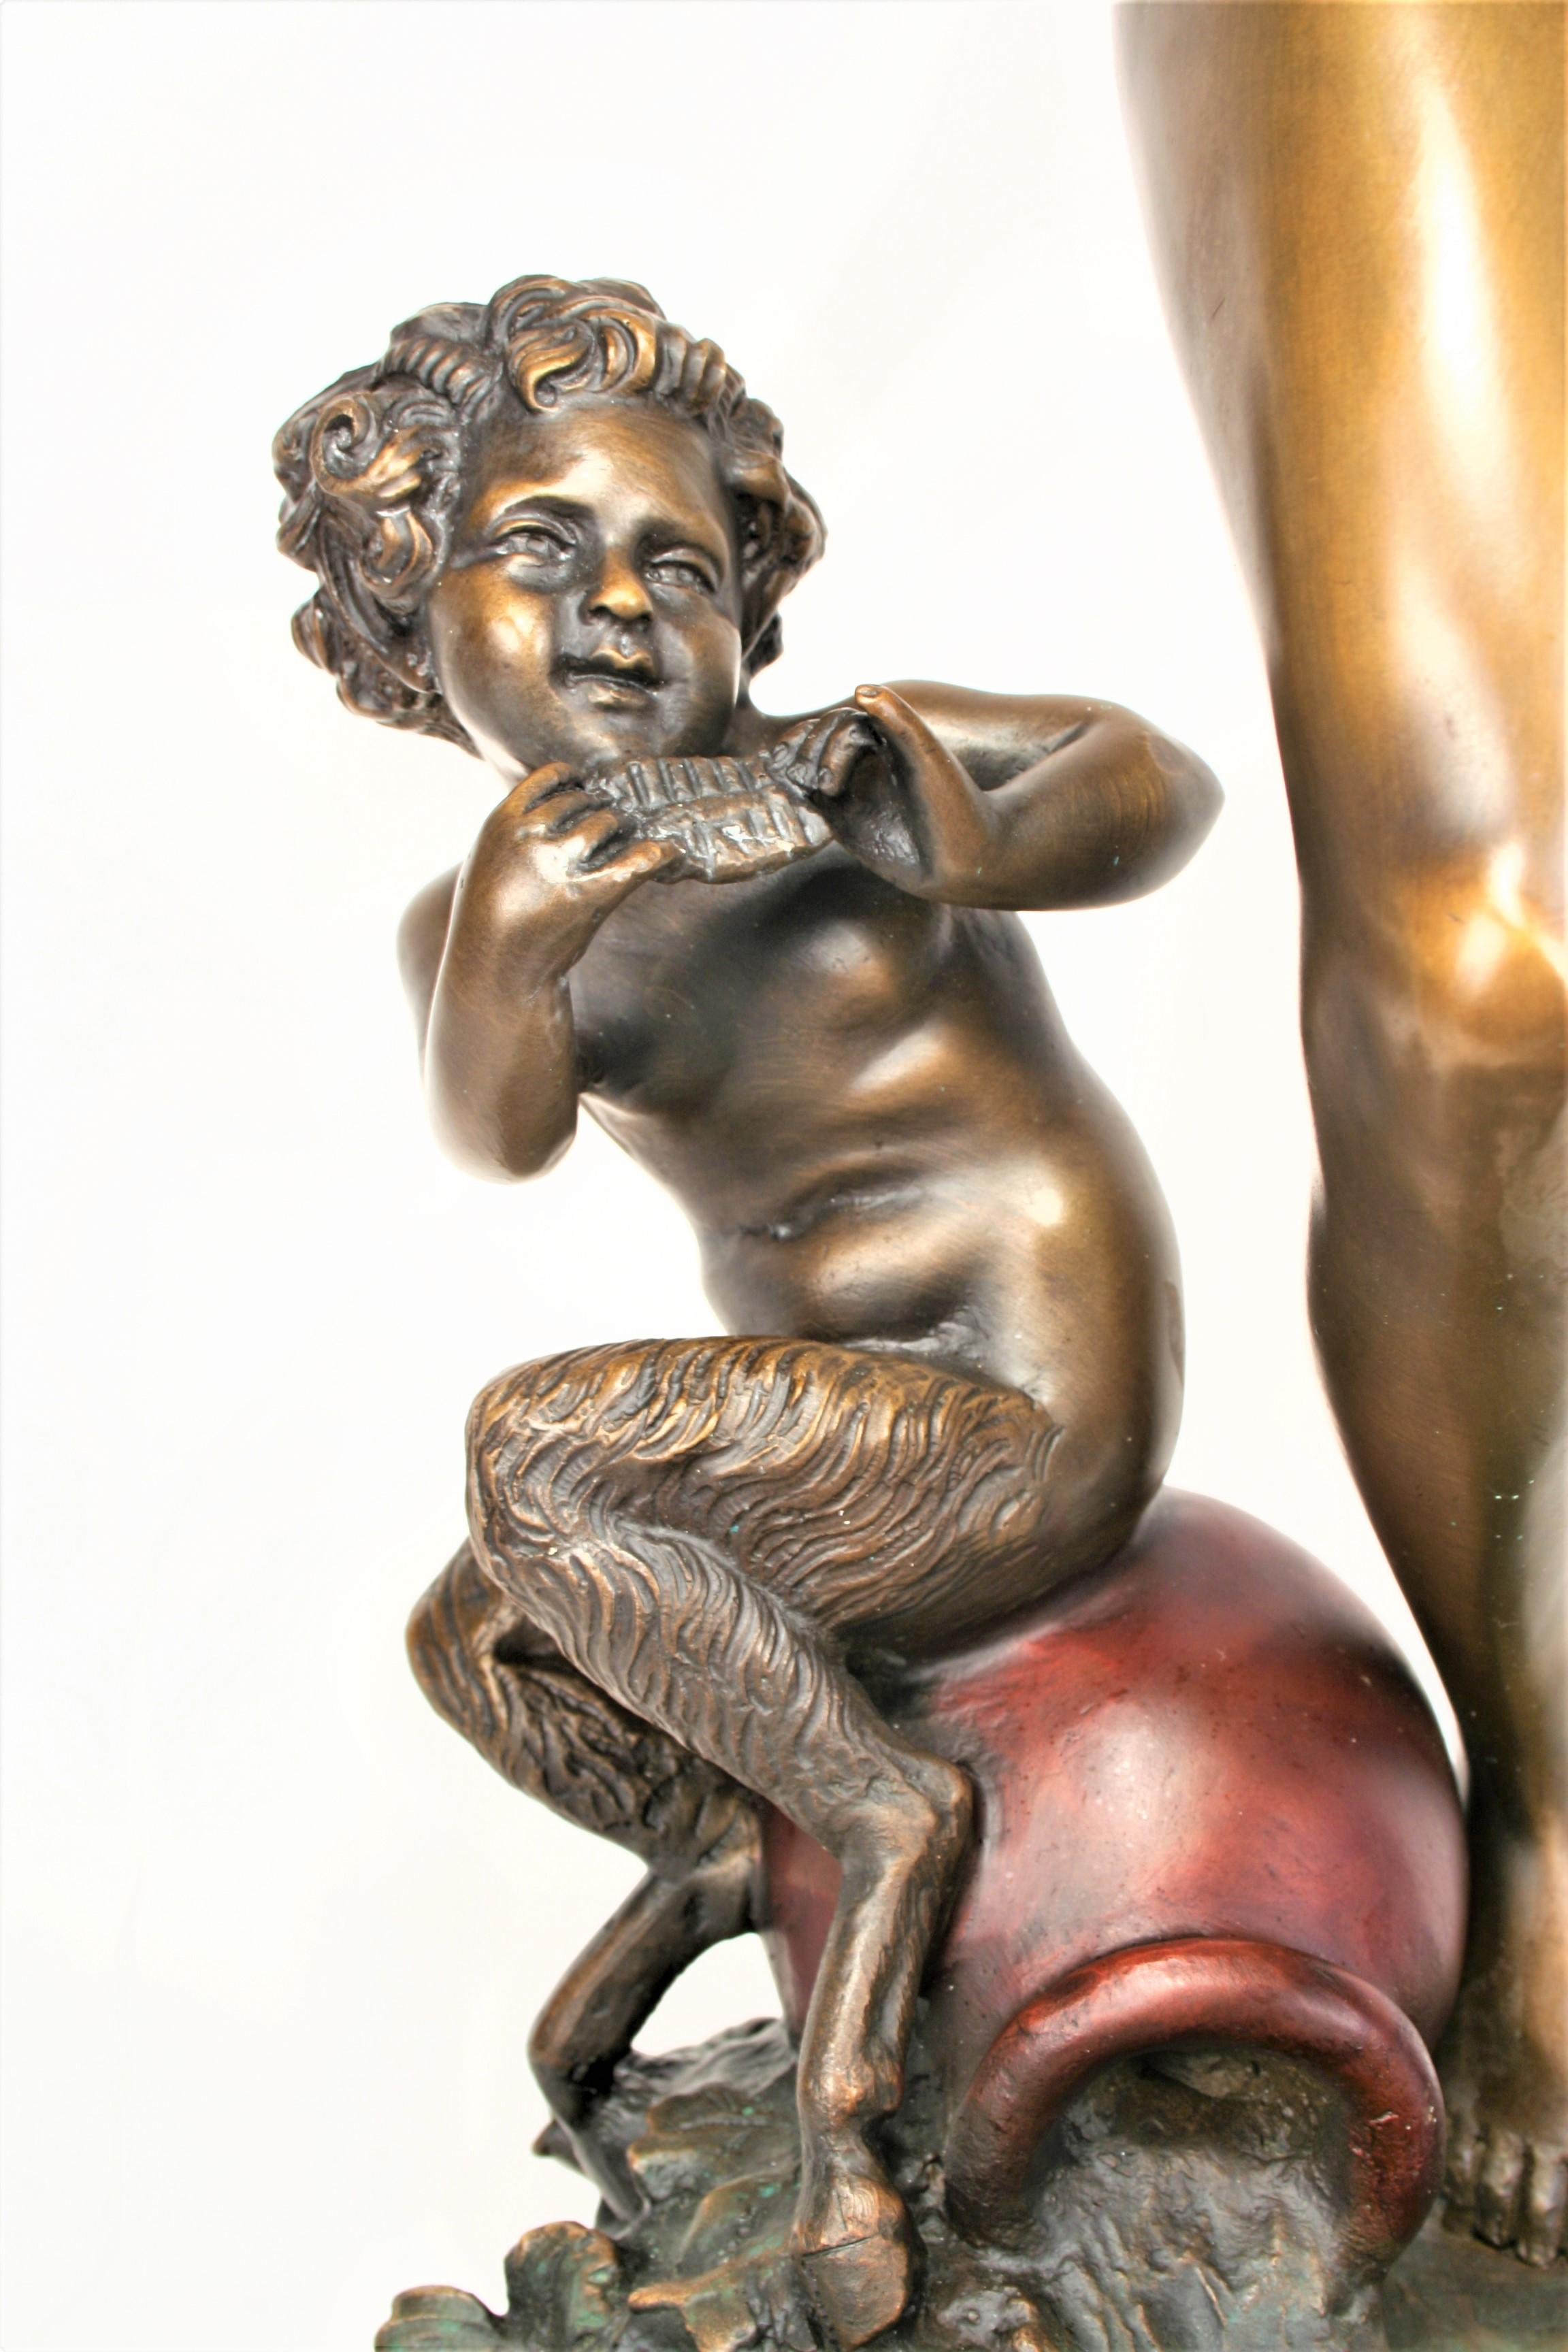 North American Art Deco/Nouveau Nude Sculpture Bronze with Pixy For Sale